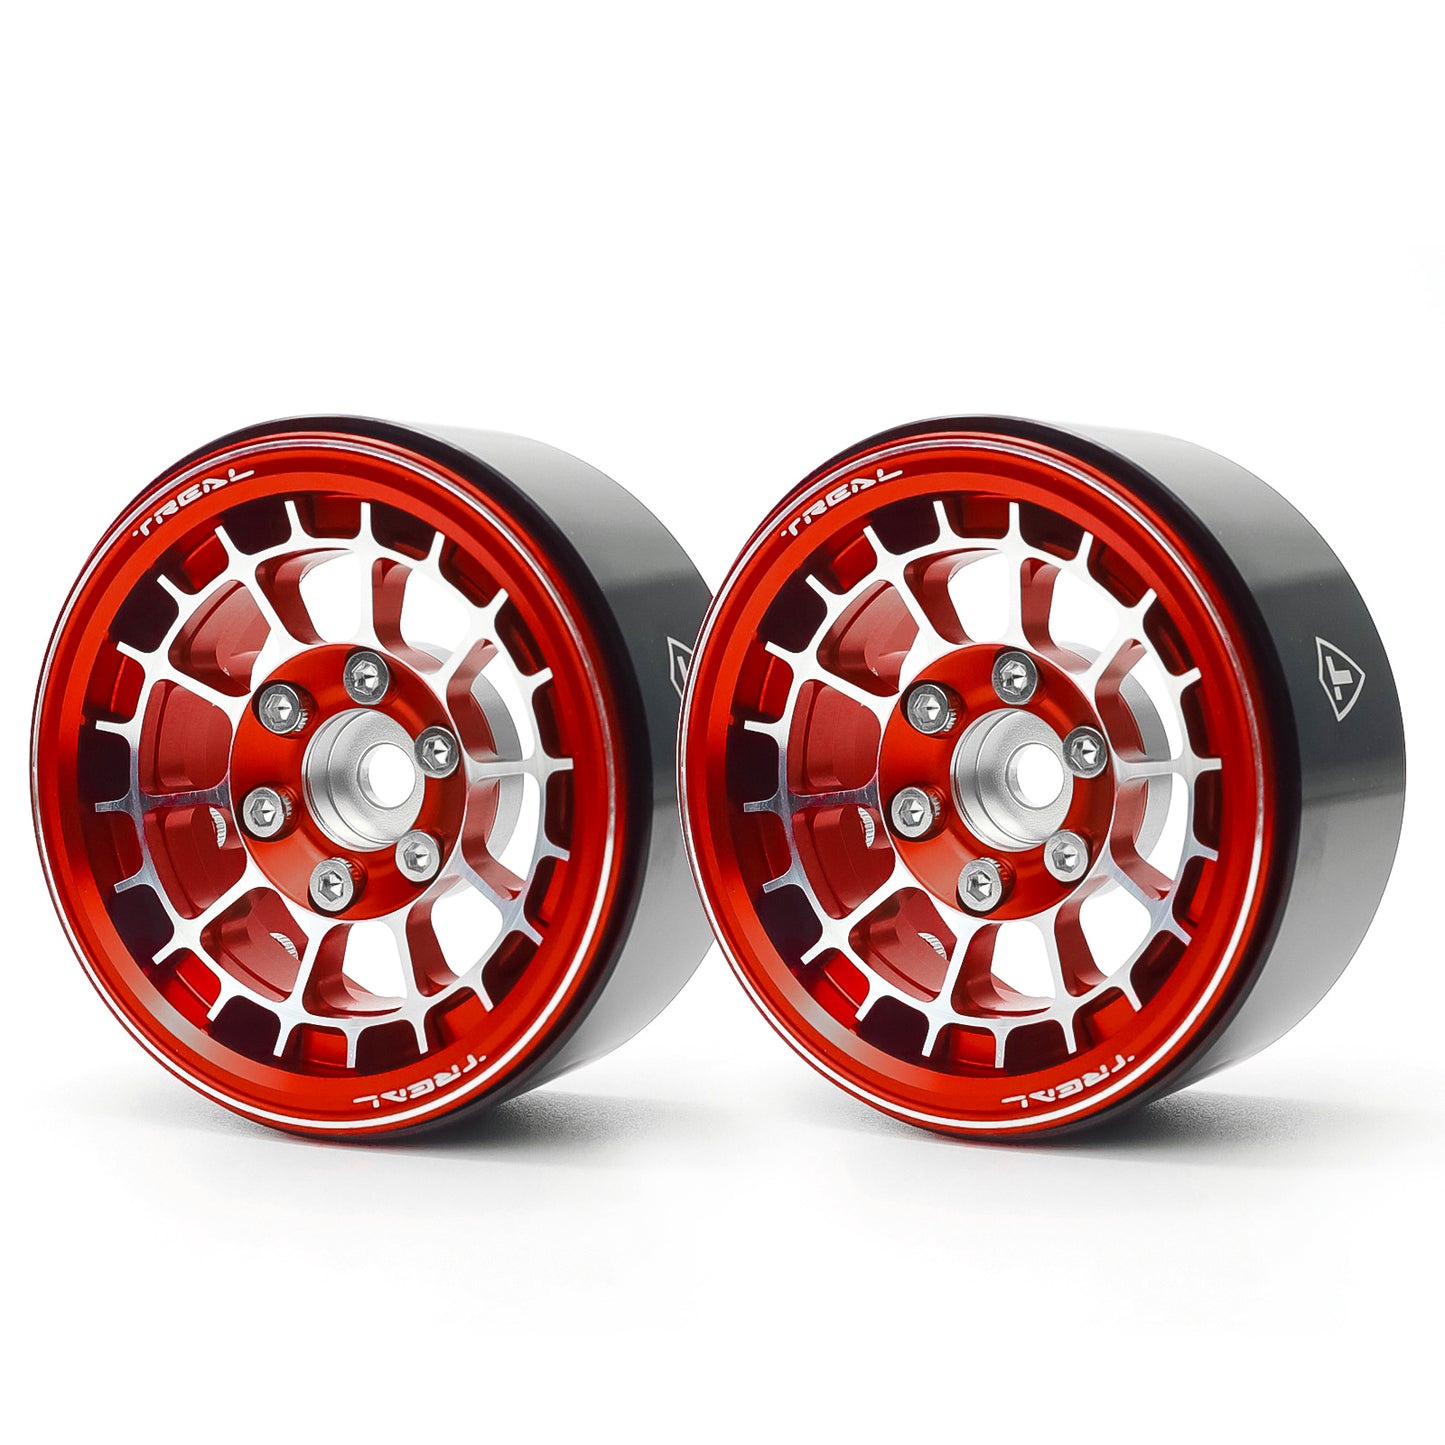 TREAL 1.9 Wheels Beadlock Wheel Rims(2) for 1:10 RC Crawler Trucks Type A